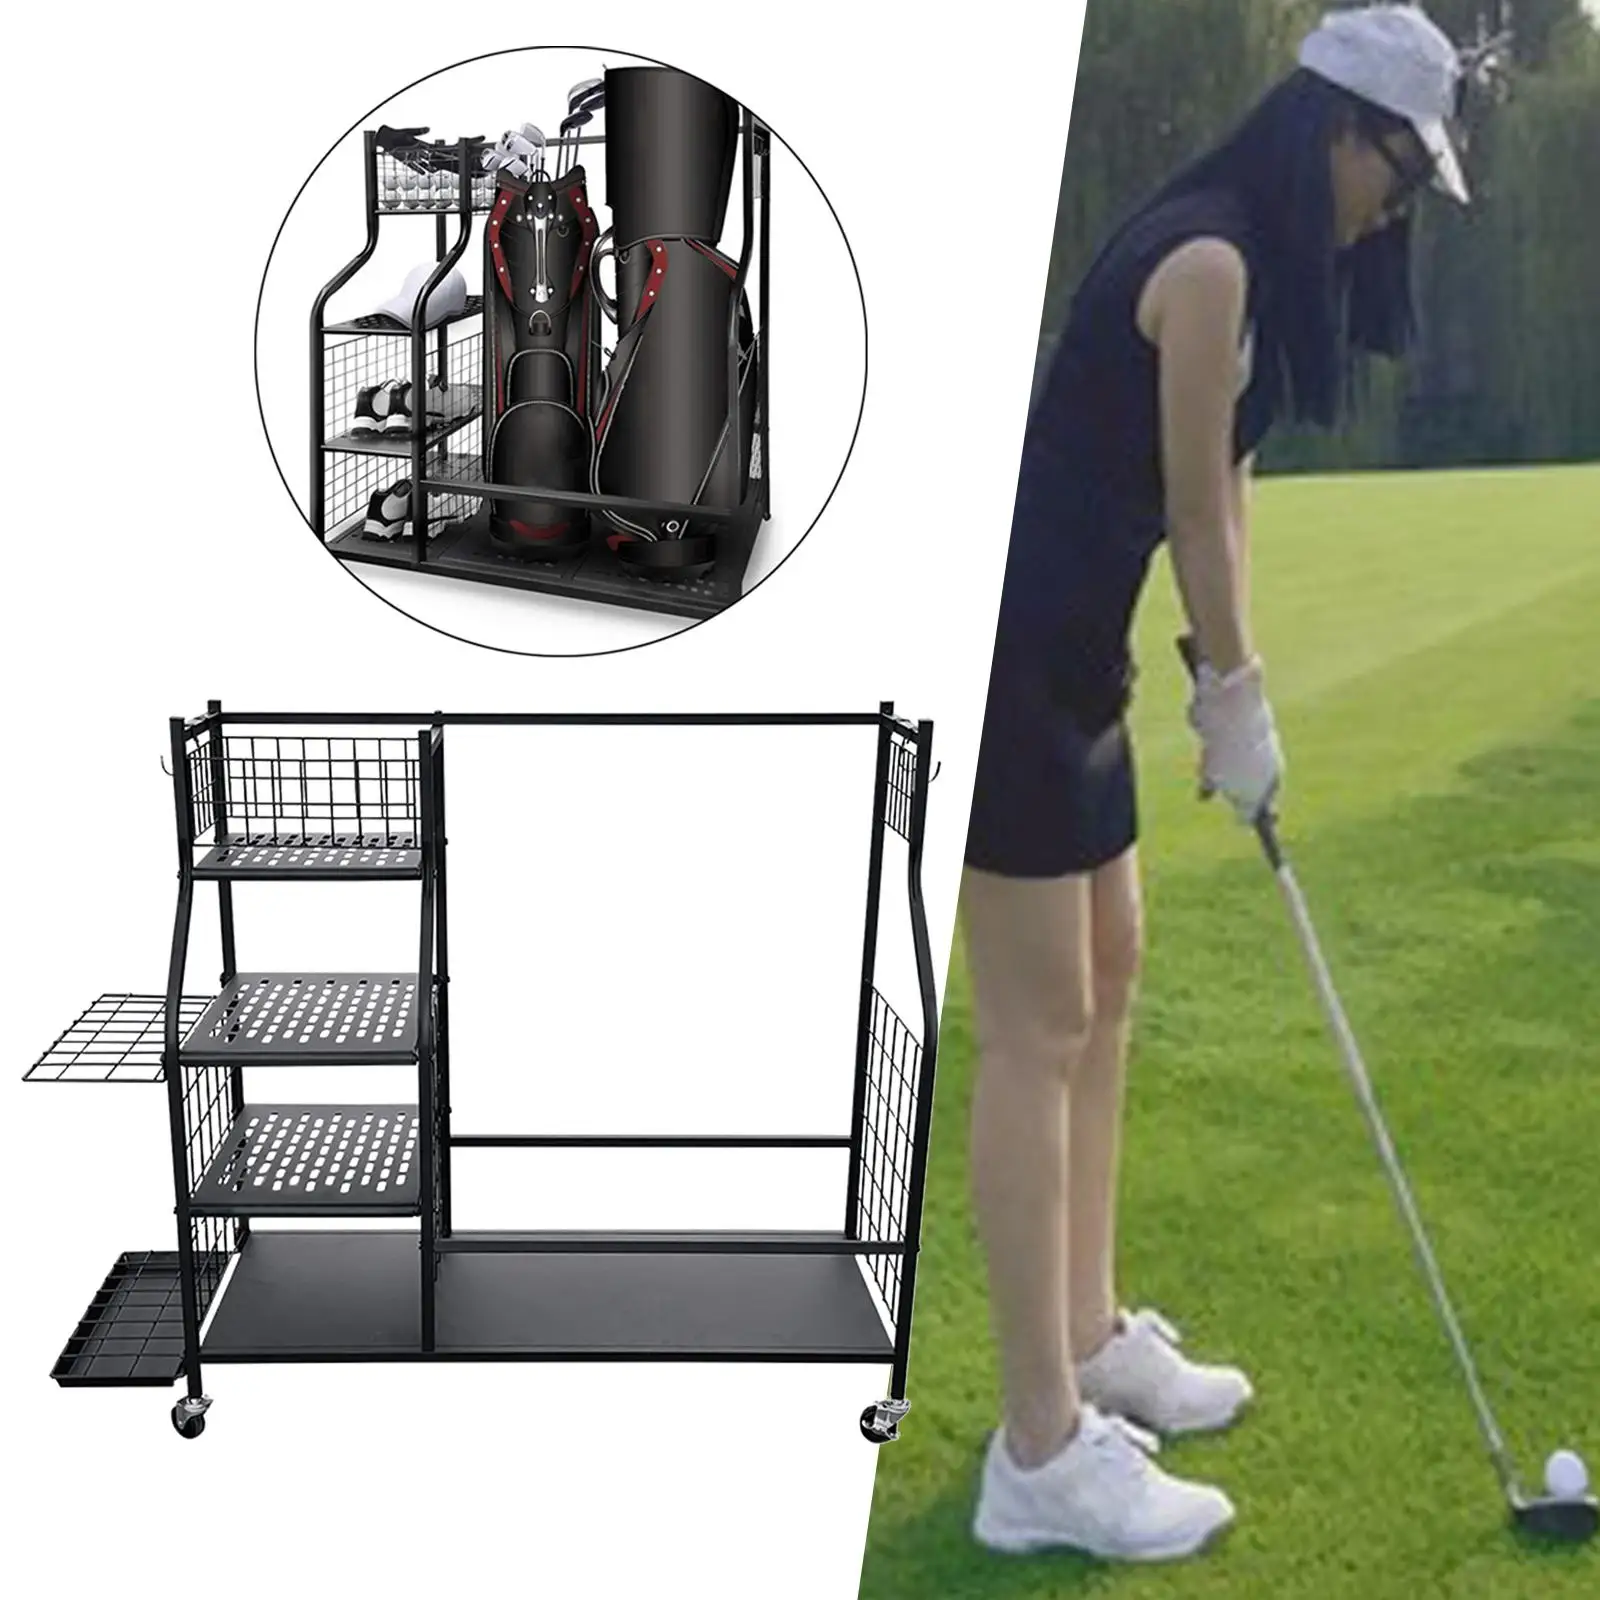 

Golf Bag Storage Rack Golf Bag Organizer Golf Storage Garage Organizer Large Accessories Metal with Wheels Holder for Clubs Shed